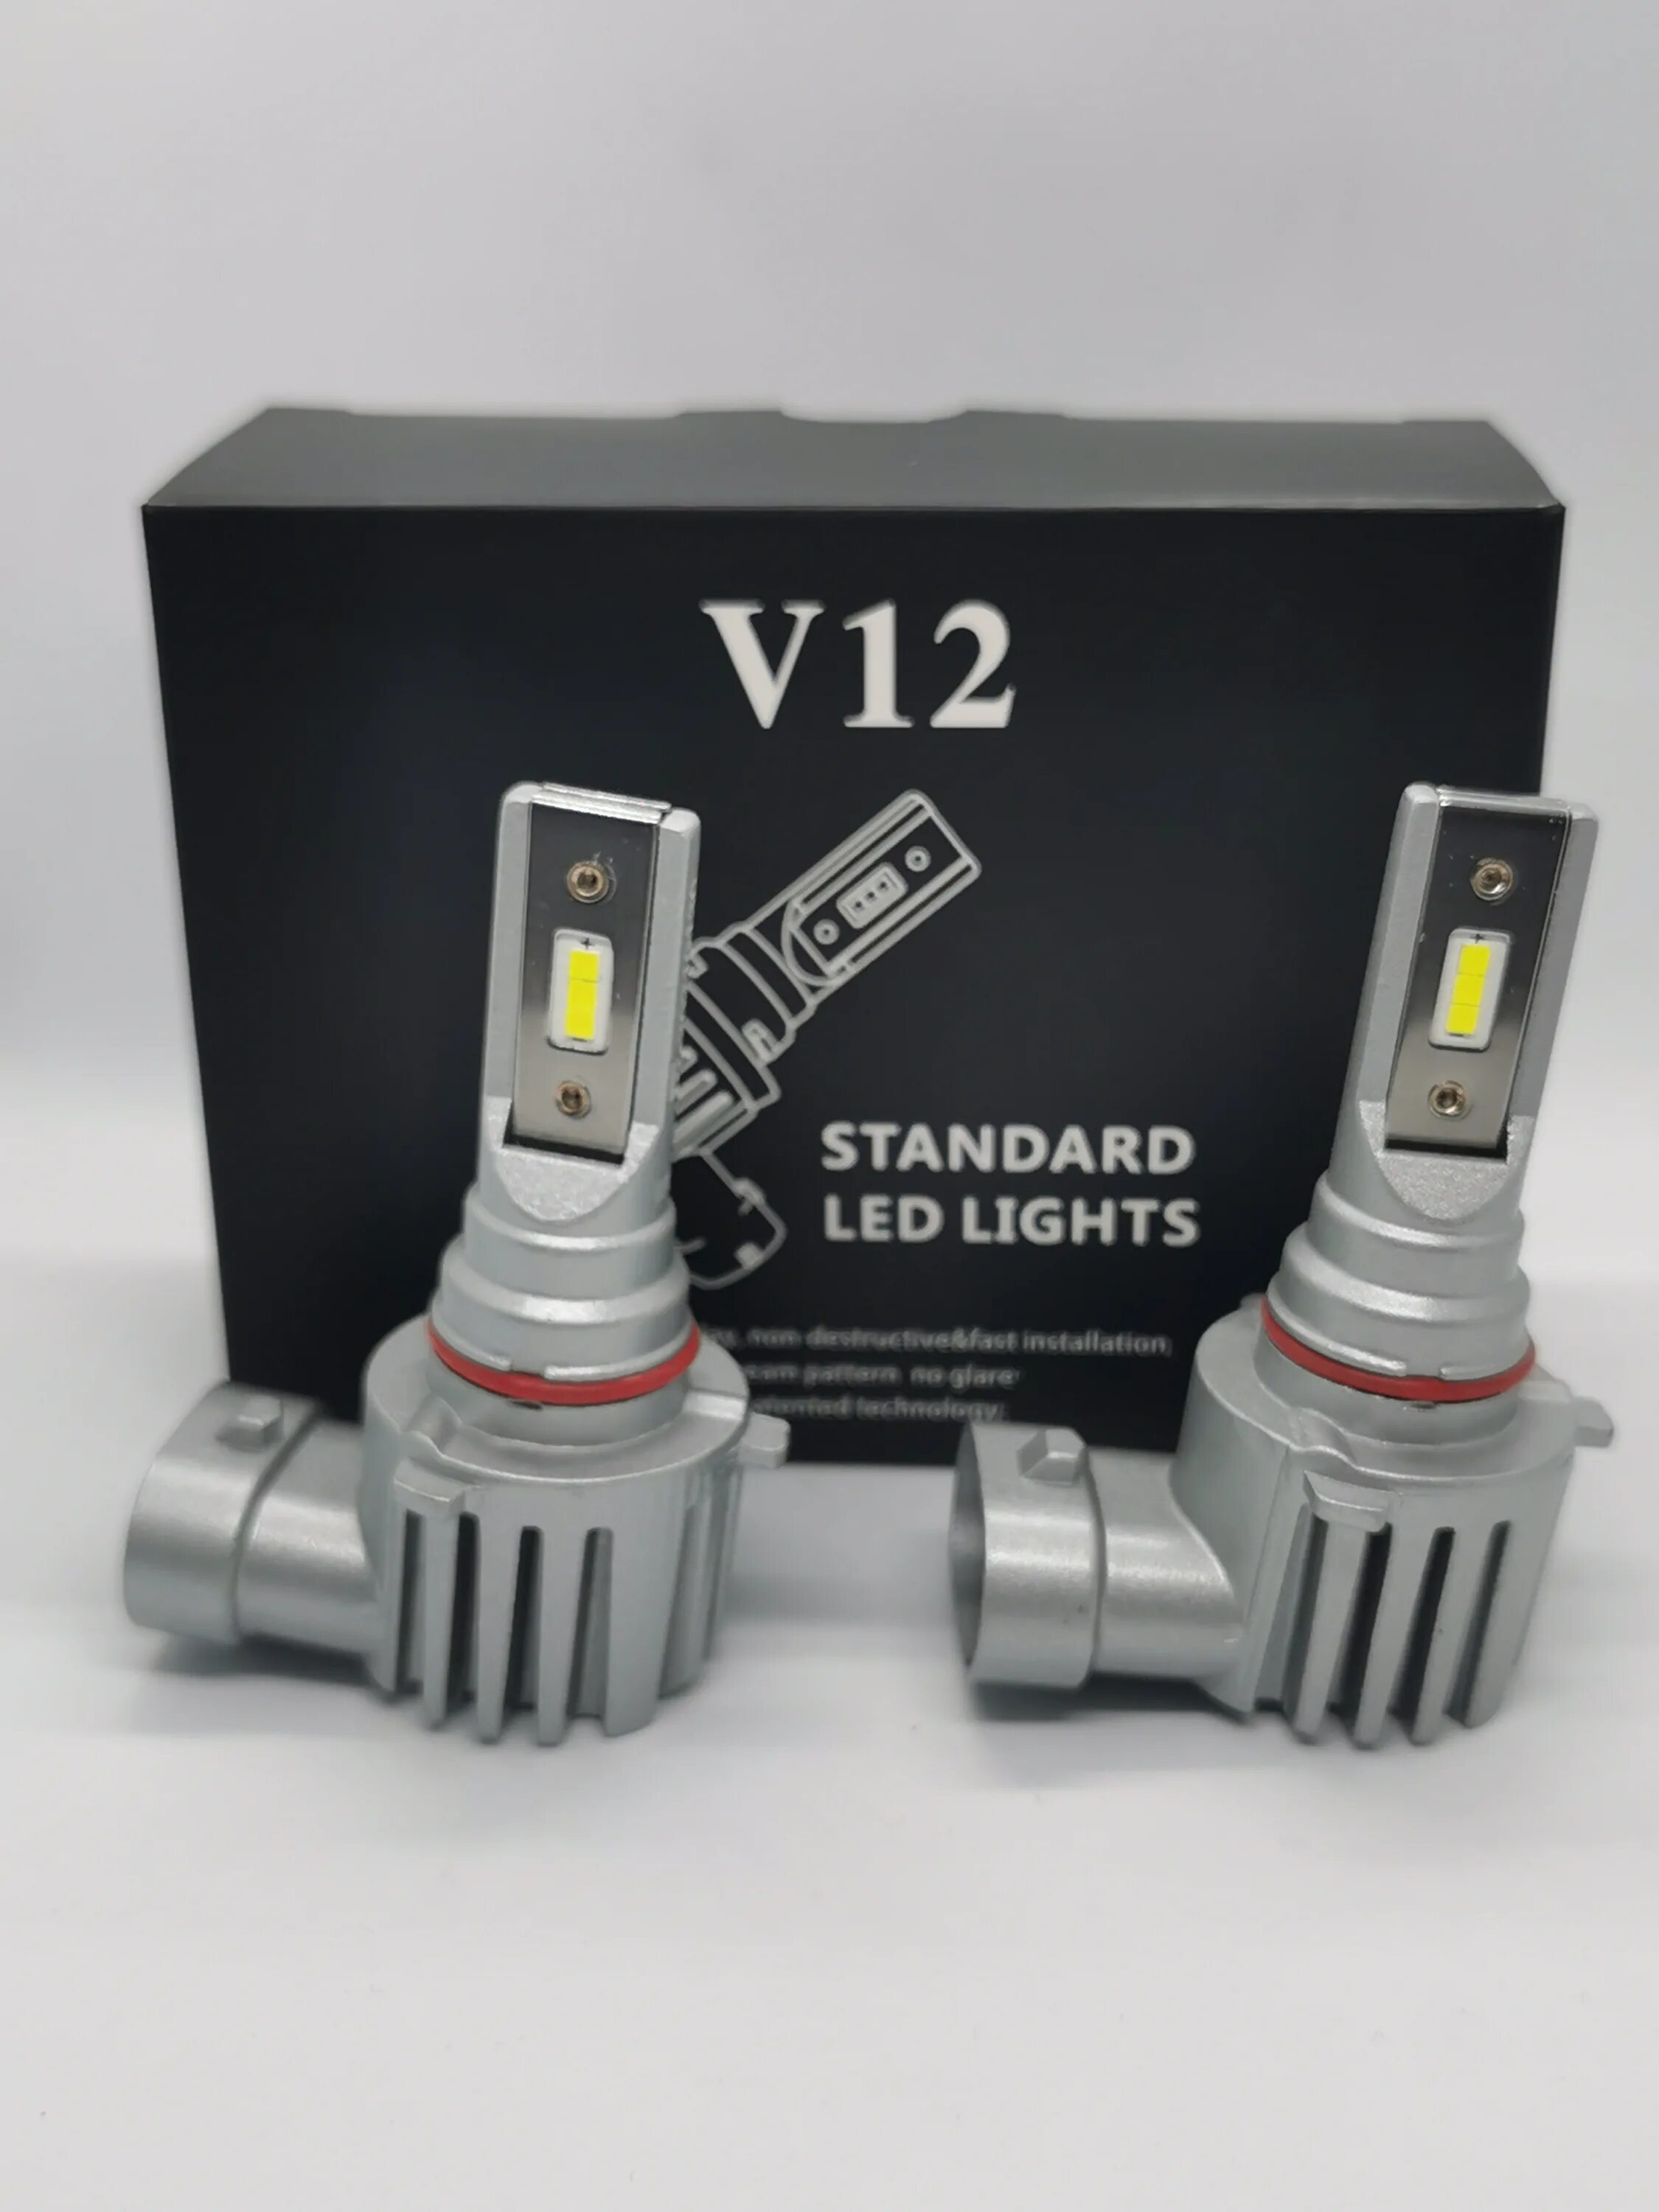 Led hb3 купить. Лампы v12 Standard led Lights. Н7 vsll12 Standard led Lights 5000к, 3600lm, 12-24v. Vsll12 Standard led Lights. Vsll12 Standard led Lights 5000к,.